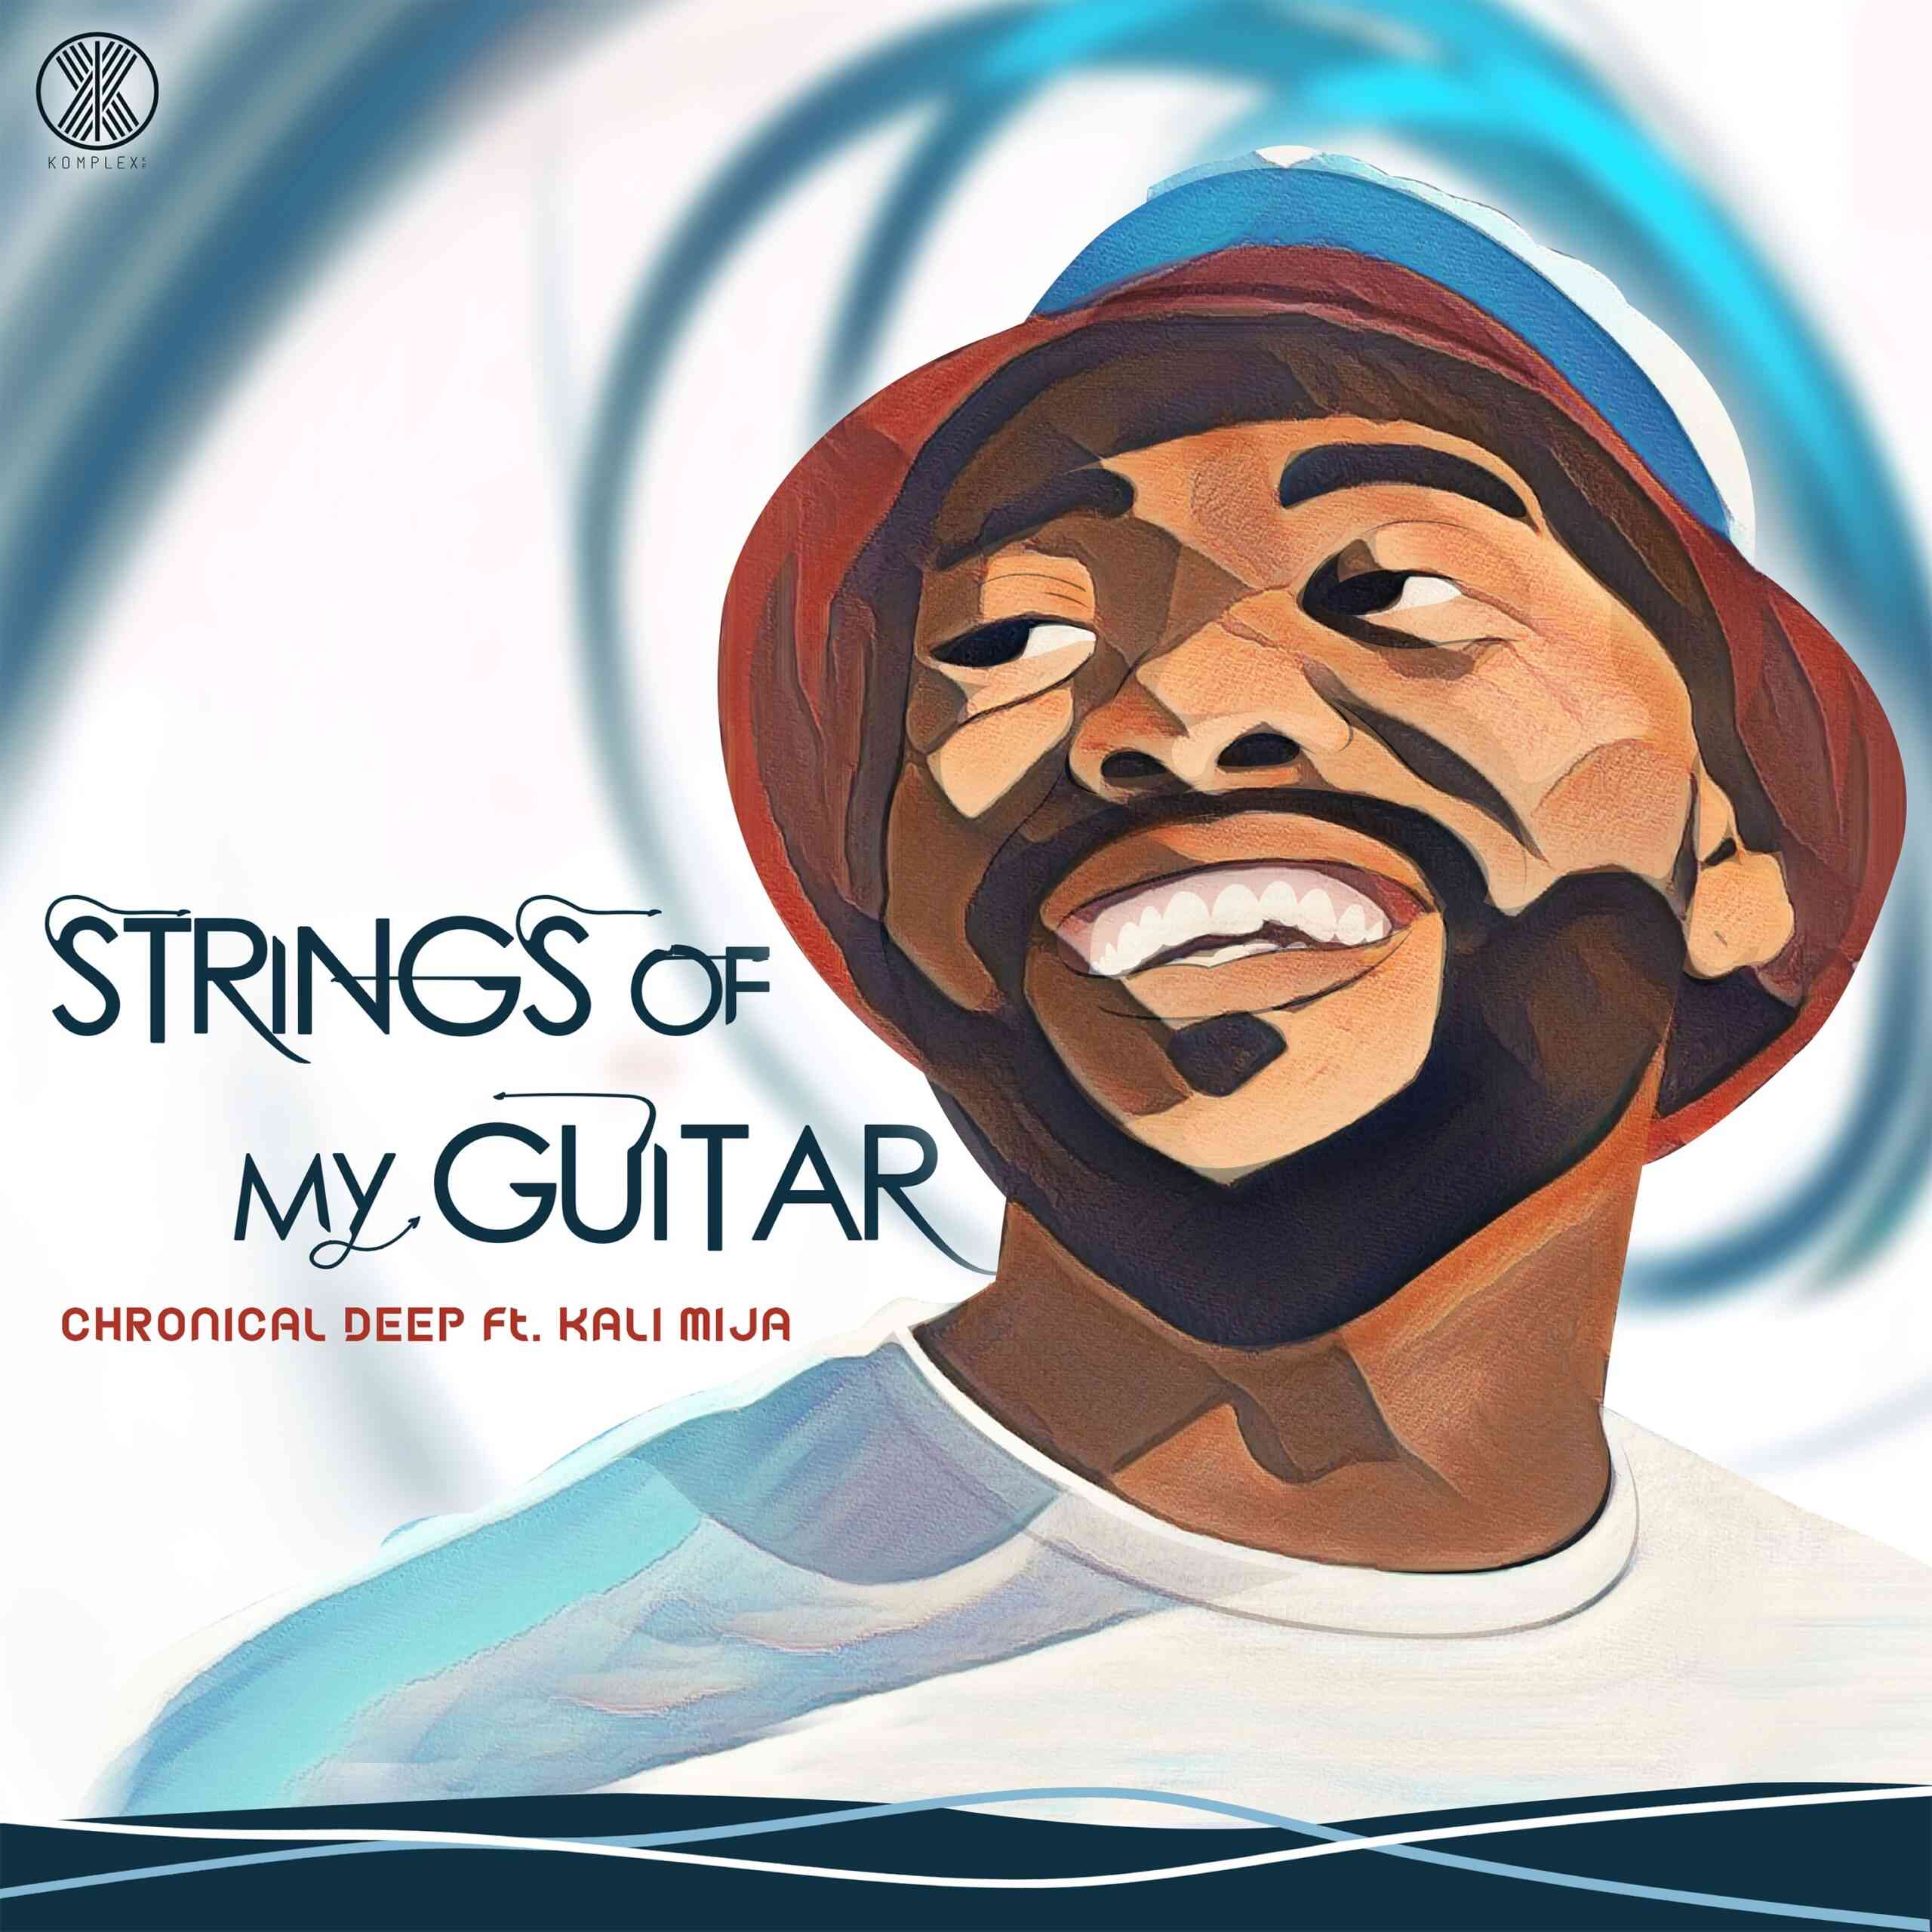 Chronical Deep Drops "Strings Of My Guitar" feat. Kali Mija